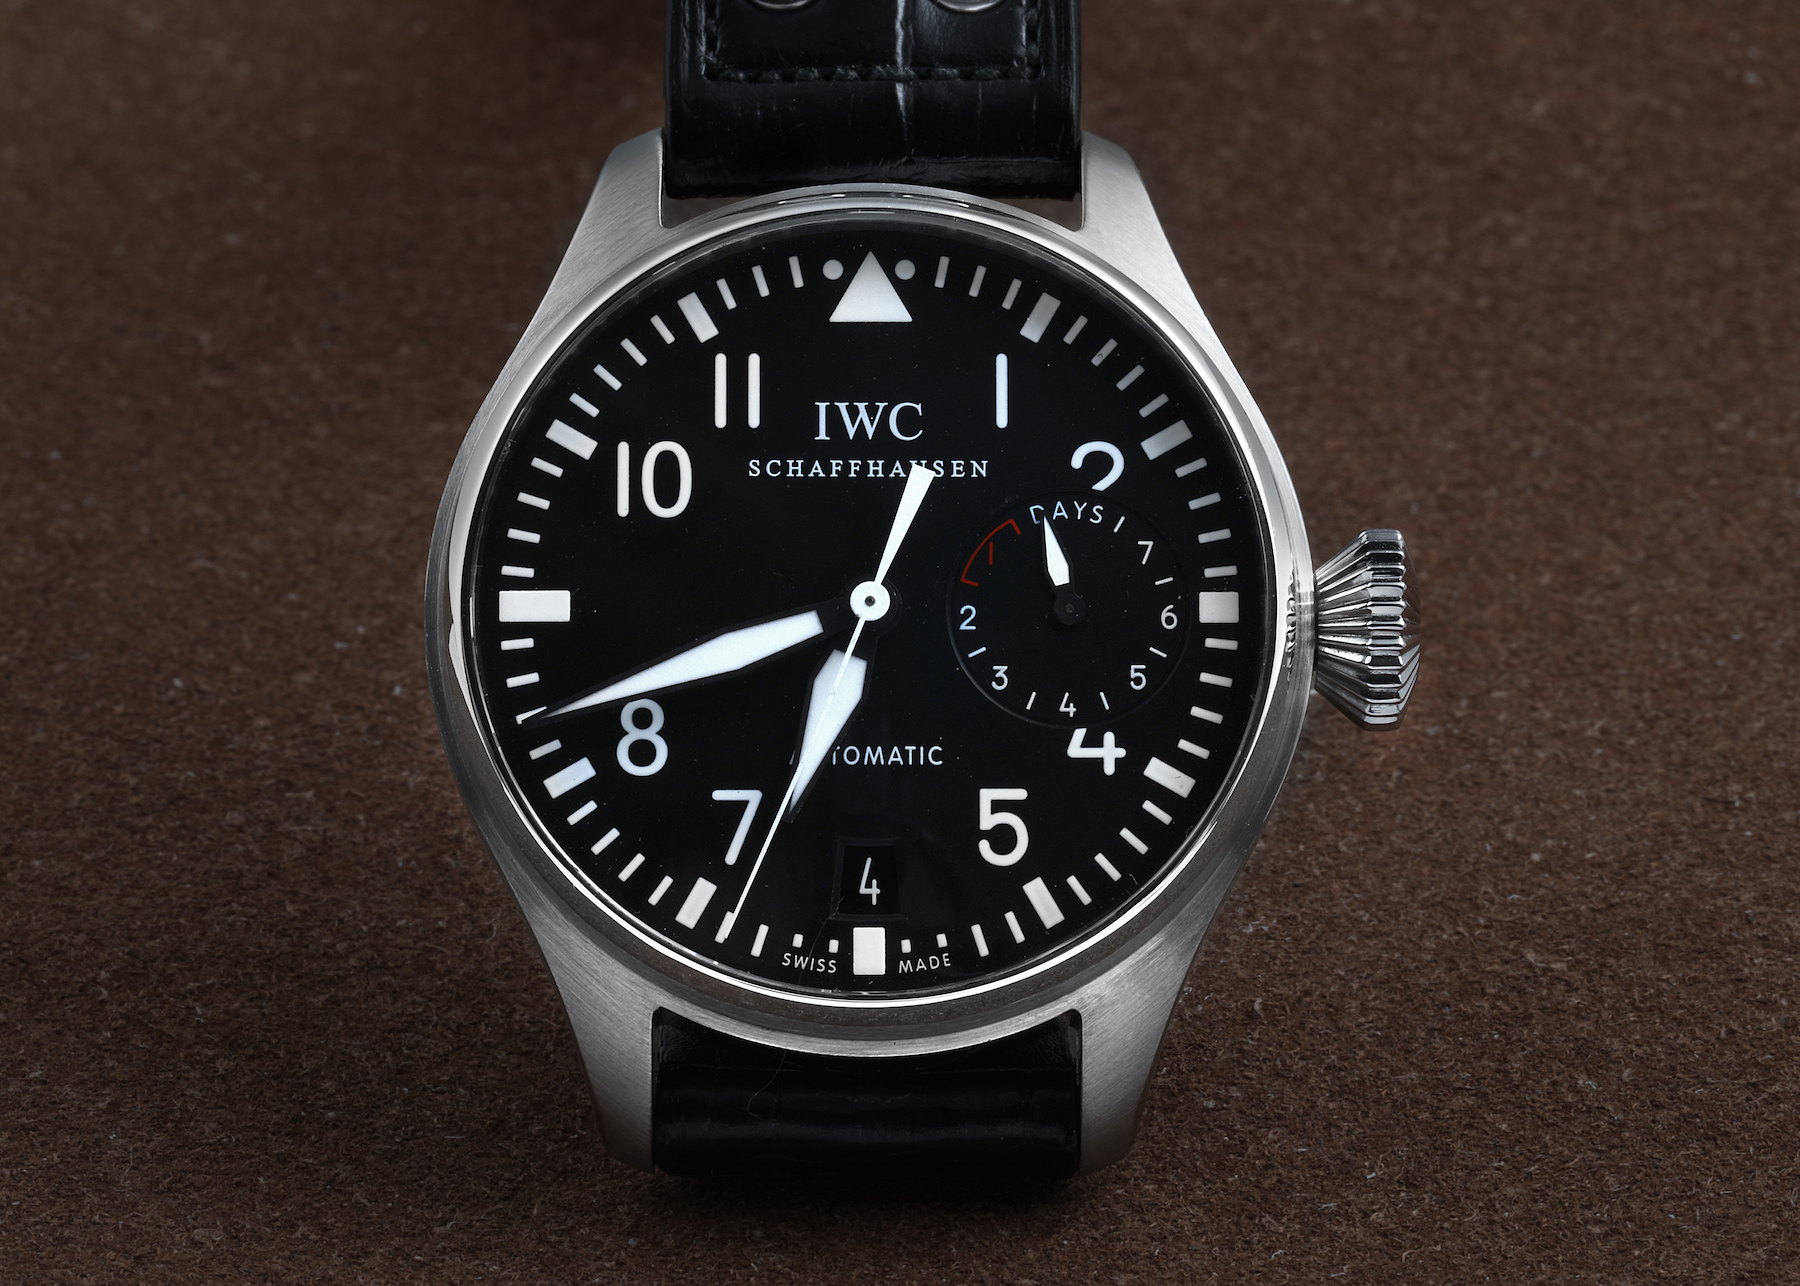 IWC Big Pilots 46mm Black Dial Automatic Steel Mens Watch IW500401